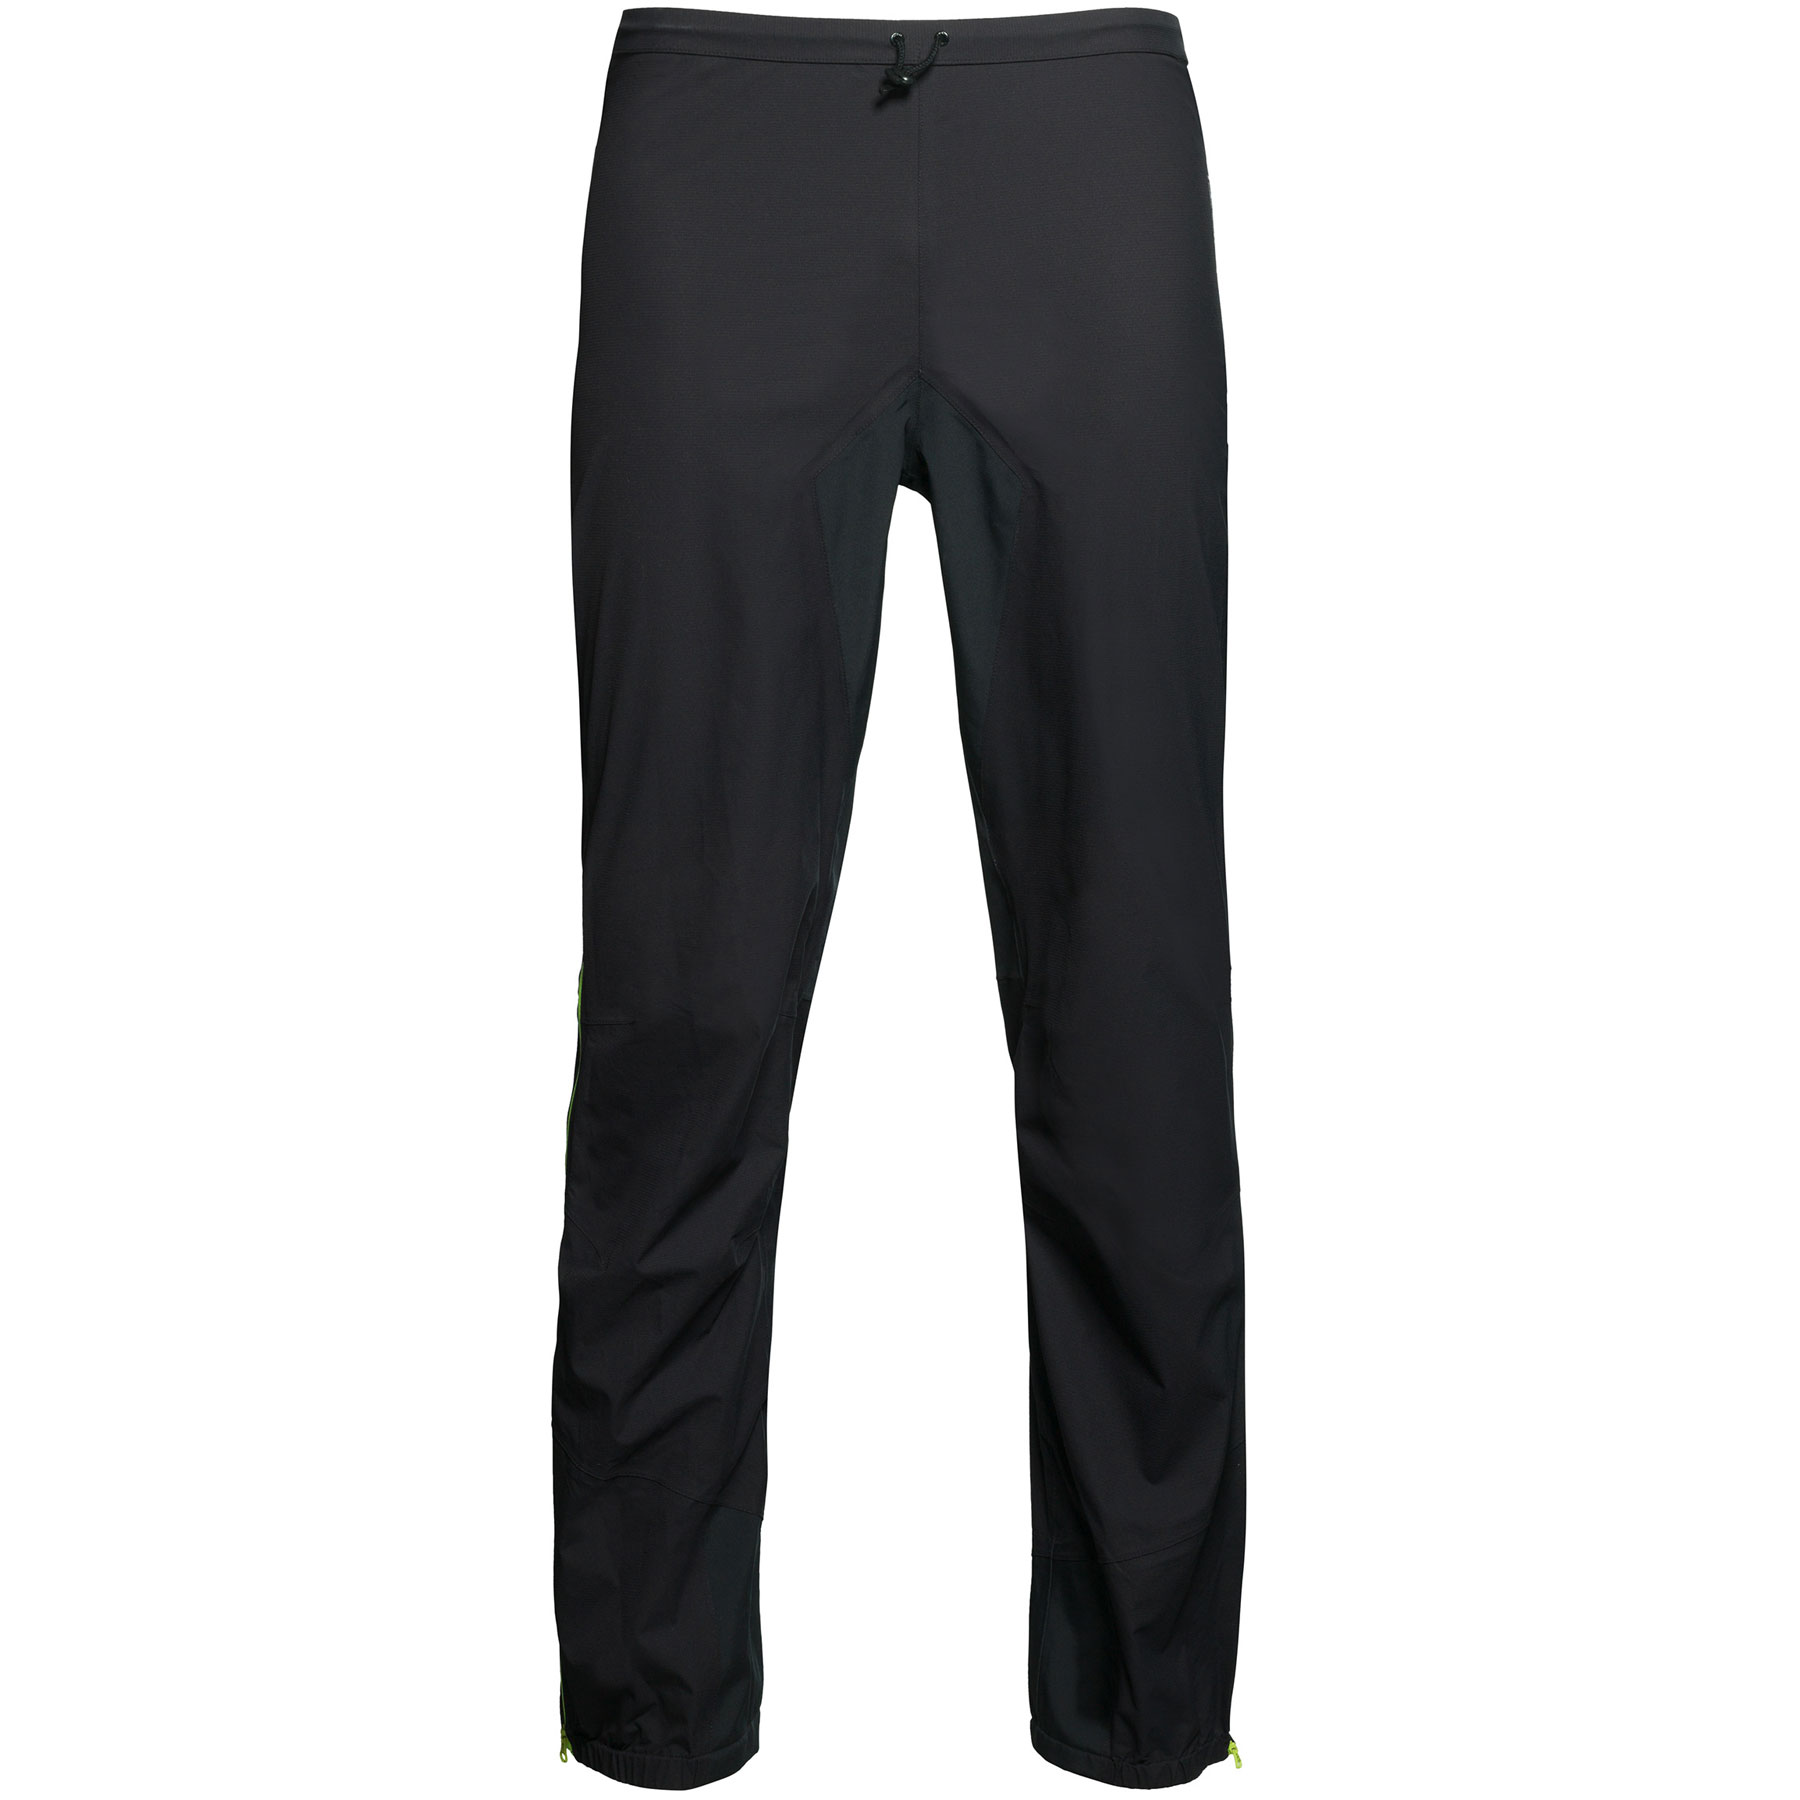 Productfoto van Yeti Horizon Unisex 2.5 Layer Pants - black/neon green